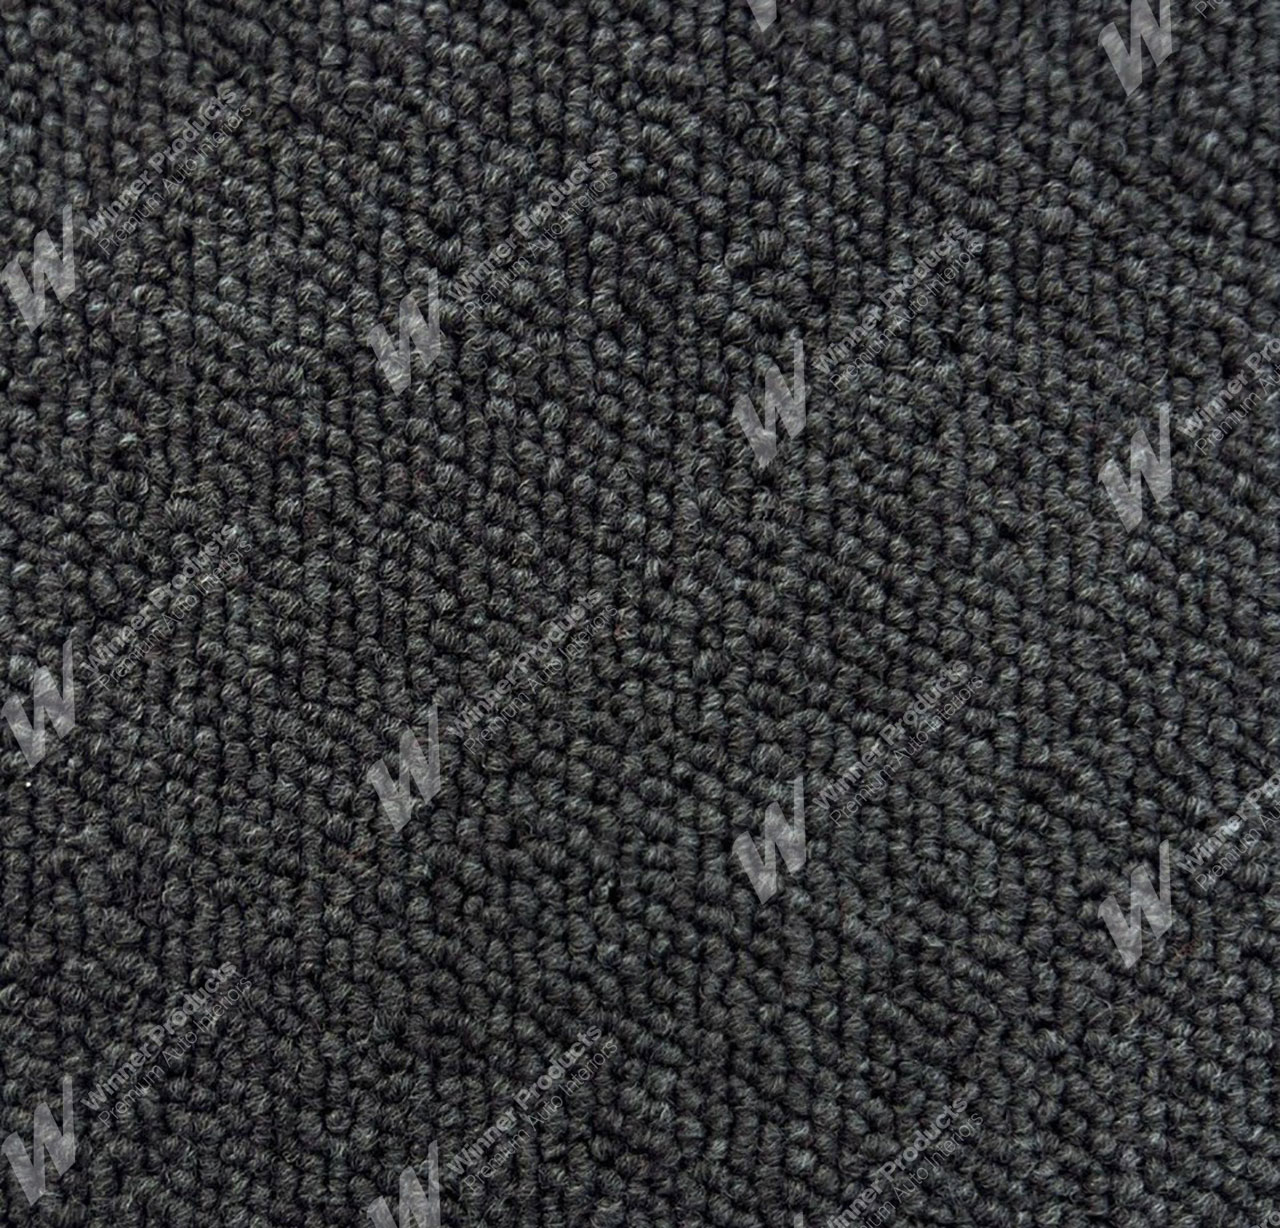 Holden Standard EH Standard Ute C61 Elephant Grey Carpet (Image 1 of 1)